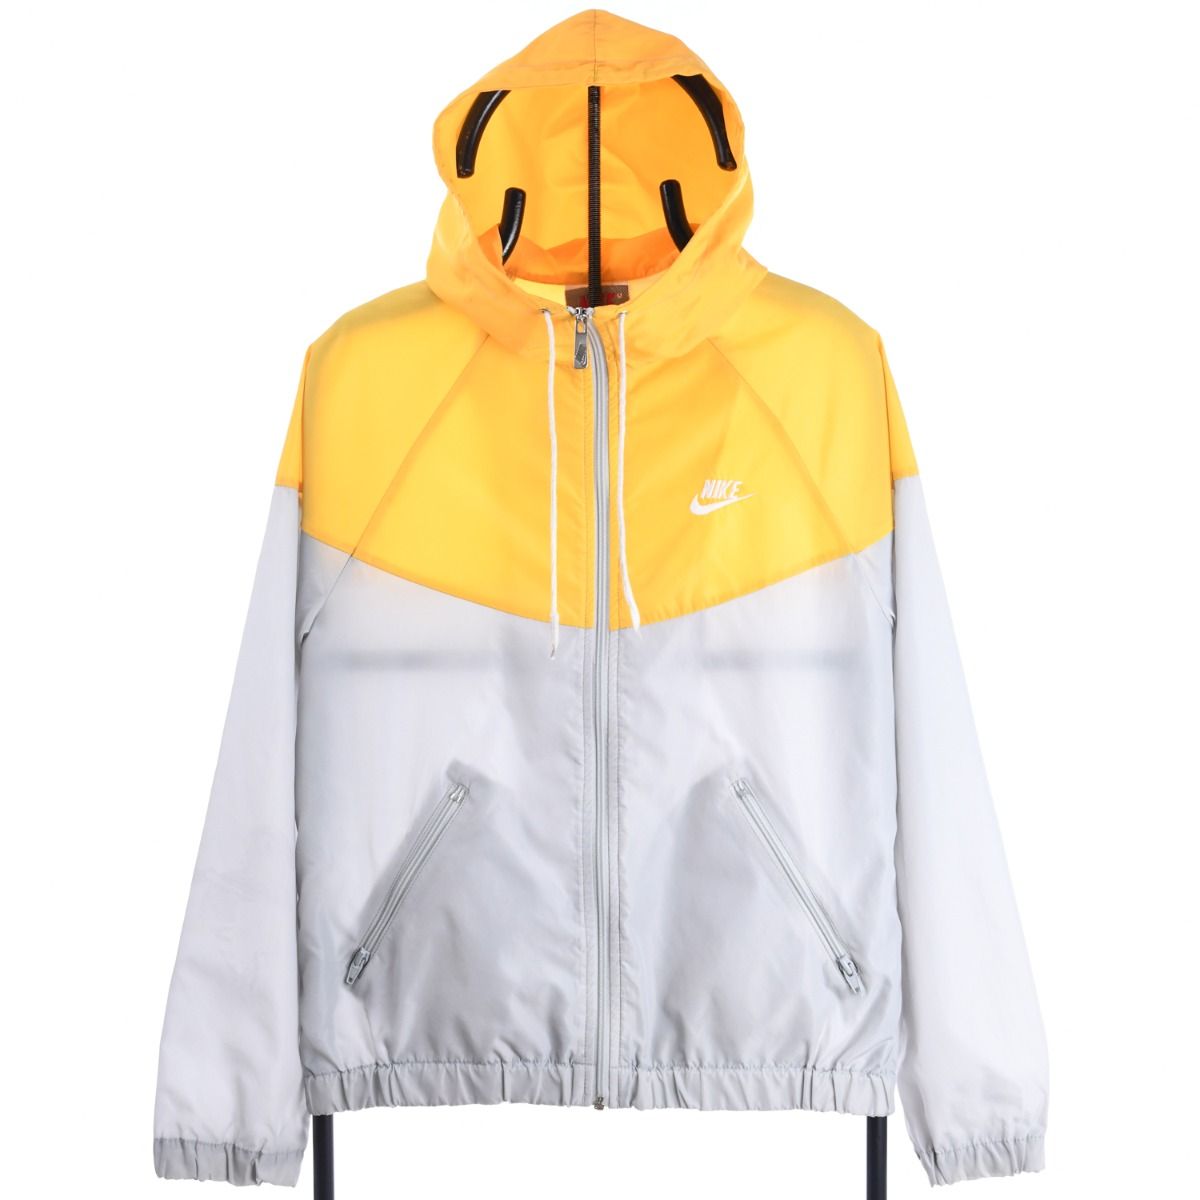 Nike Early 1990s Yellow Shell Jacket